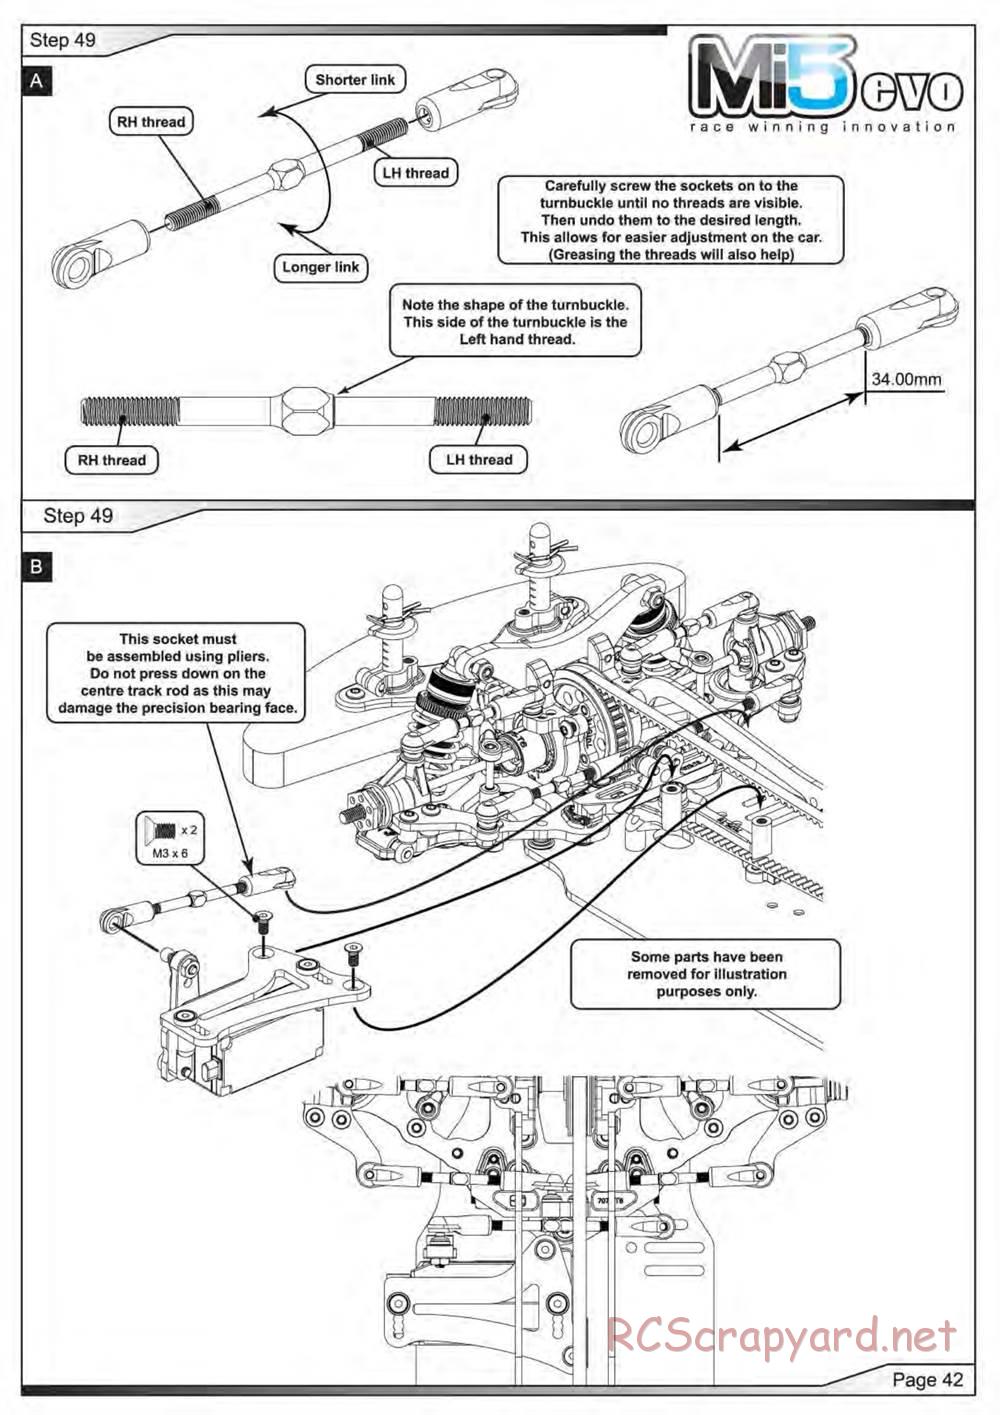 Schumacher - Mi5 Evo - Manual - Page 43